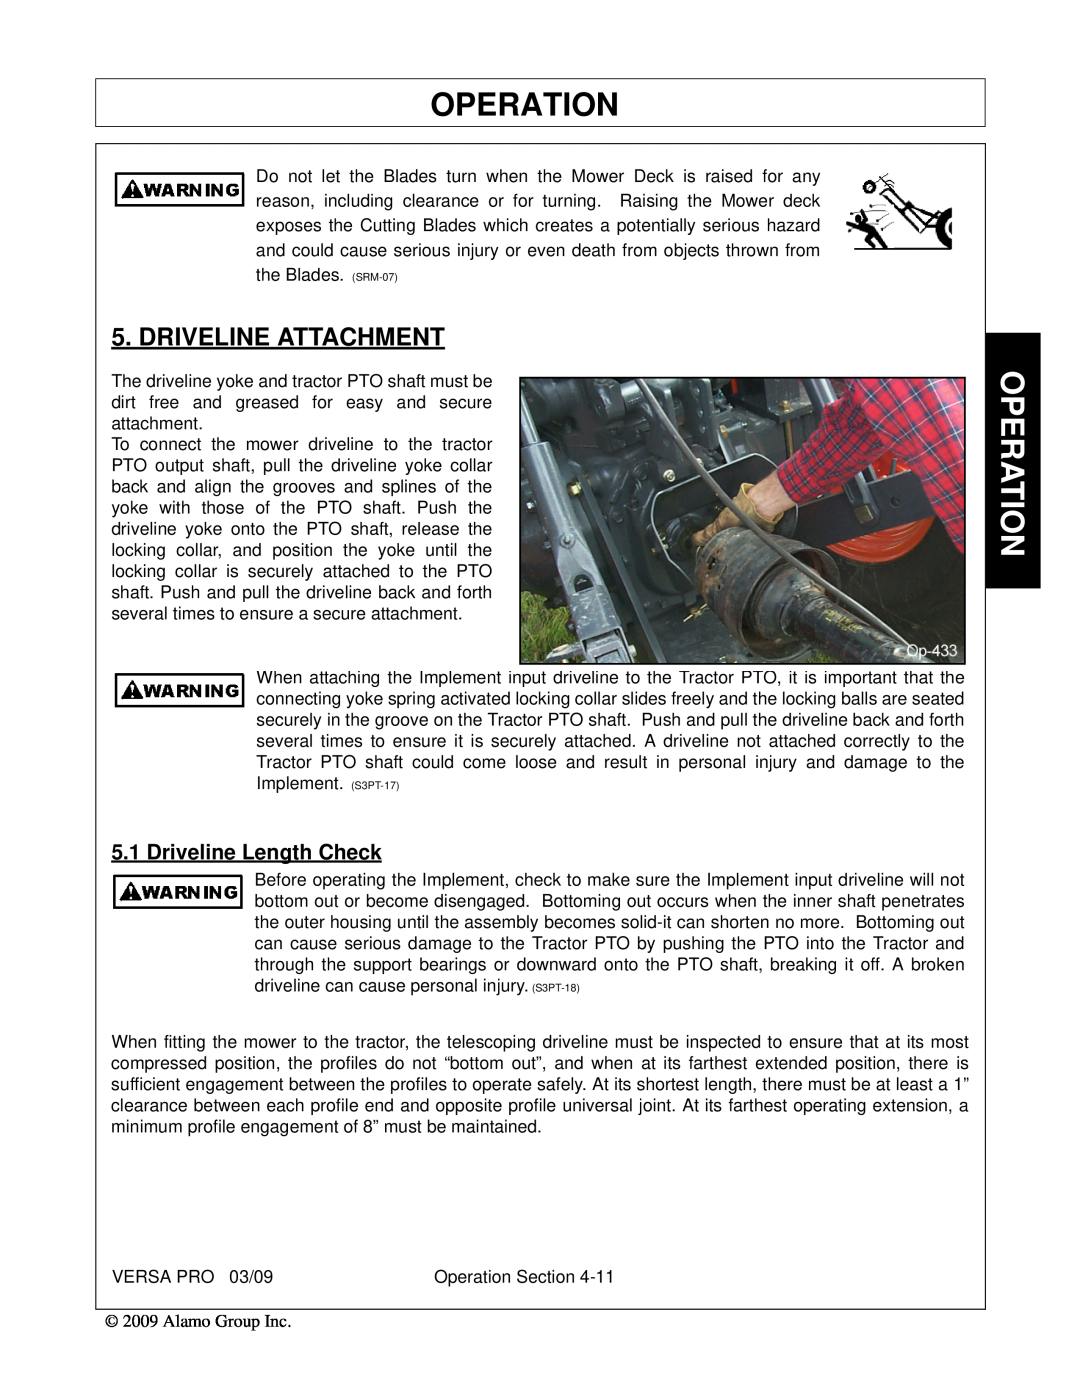 Alamo 803350C manual Driveline Attachment, Driveline Length Check, Operation 